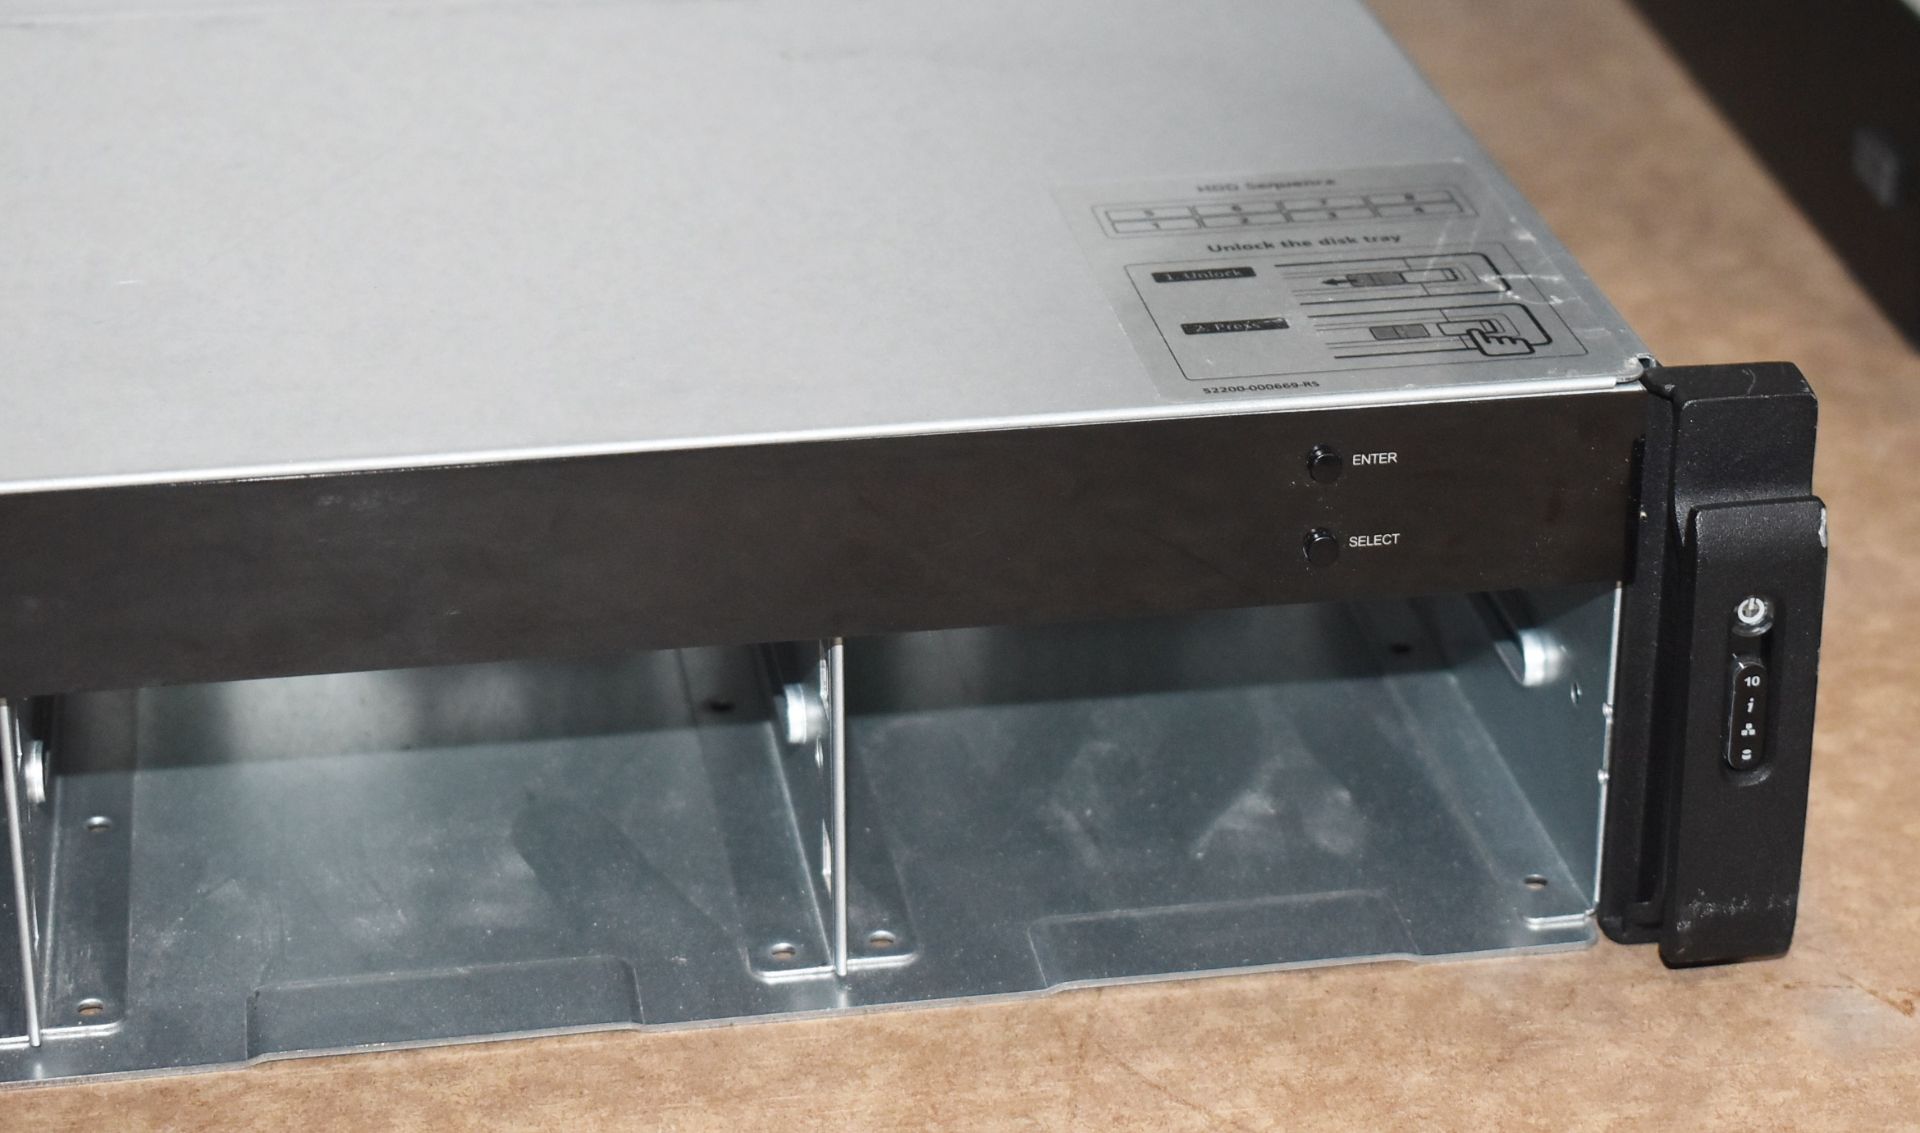 1 x QNAP 8 Bay 2u NAS Storage Device - Model TS-879U-RP - RRP £1,500 - Ref: MPC176 CA - CL678 - - Image 5 of 11